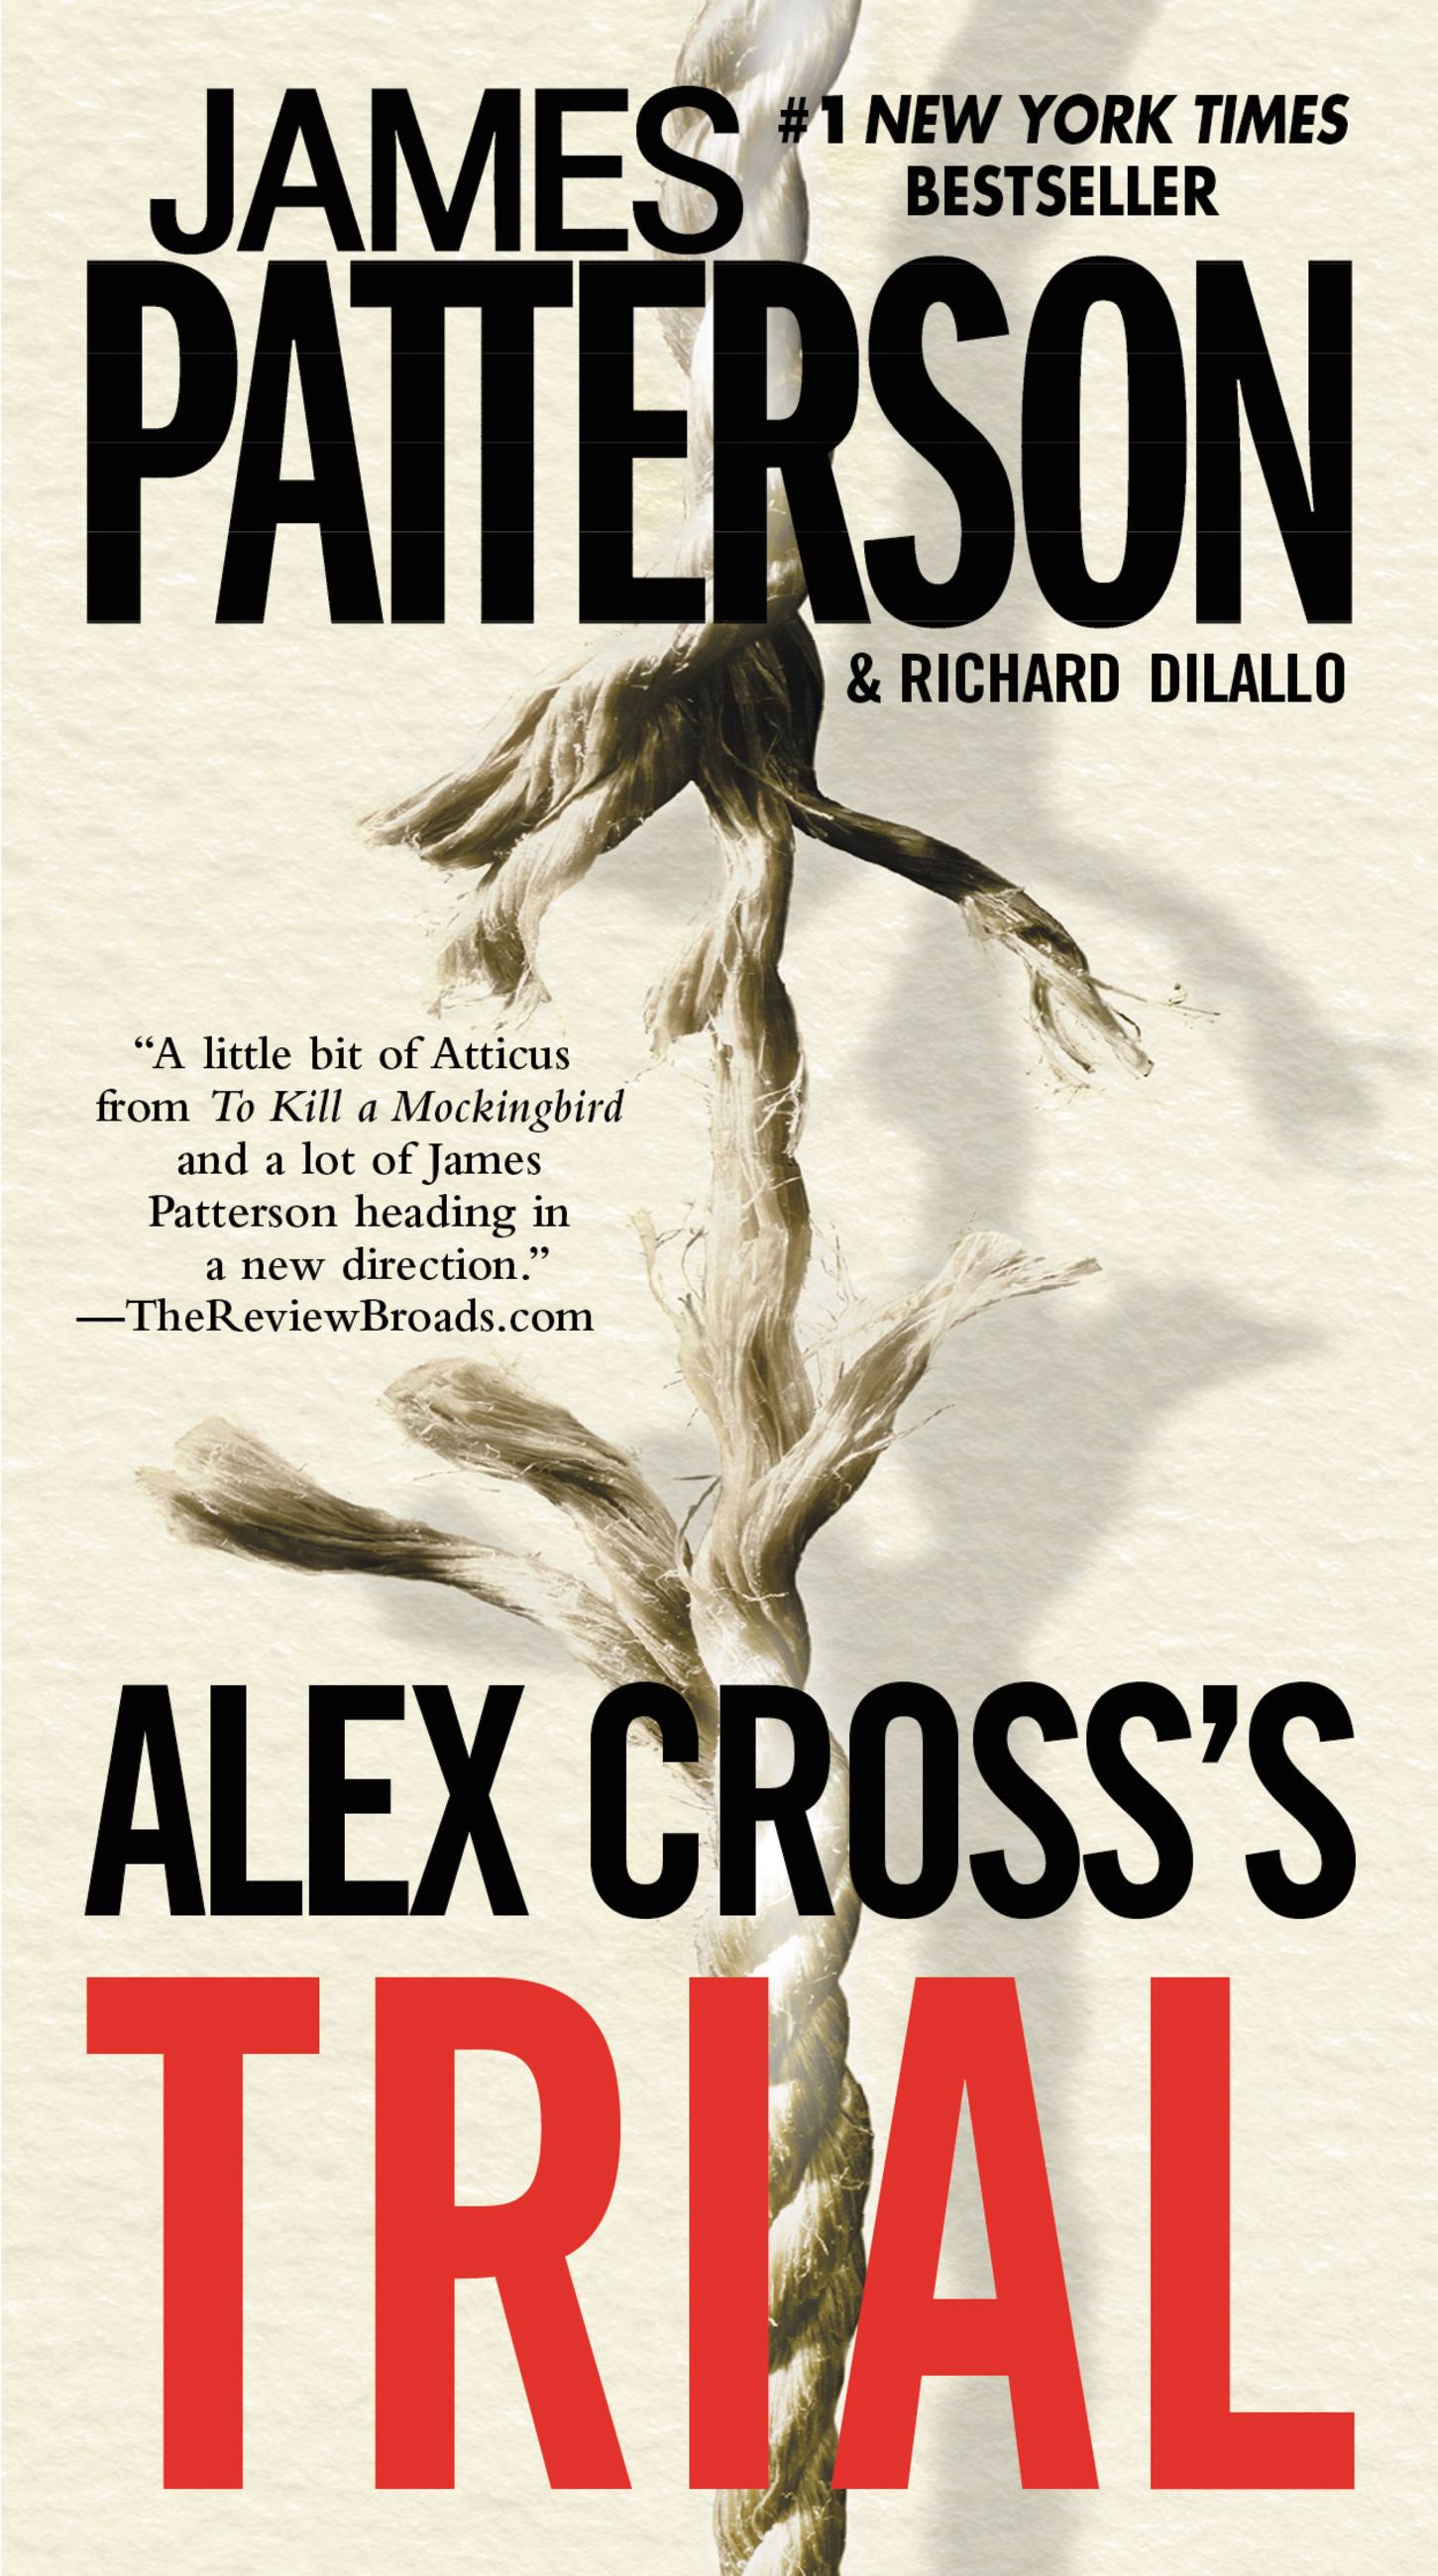 Alex Cross Adventures: Alex Cross's TRIAL (Series #1) (Paperback) - image 1 of 1